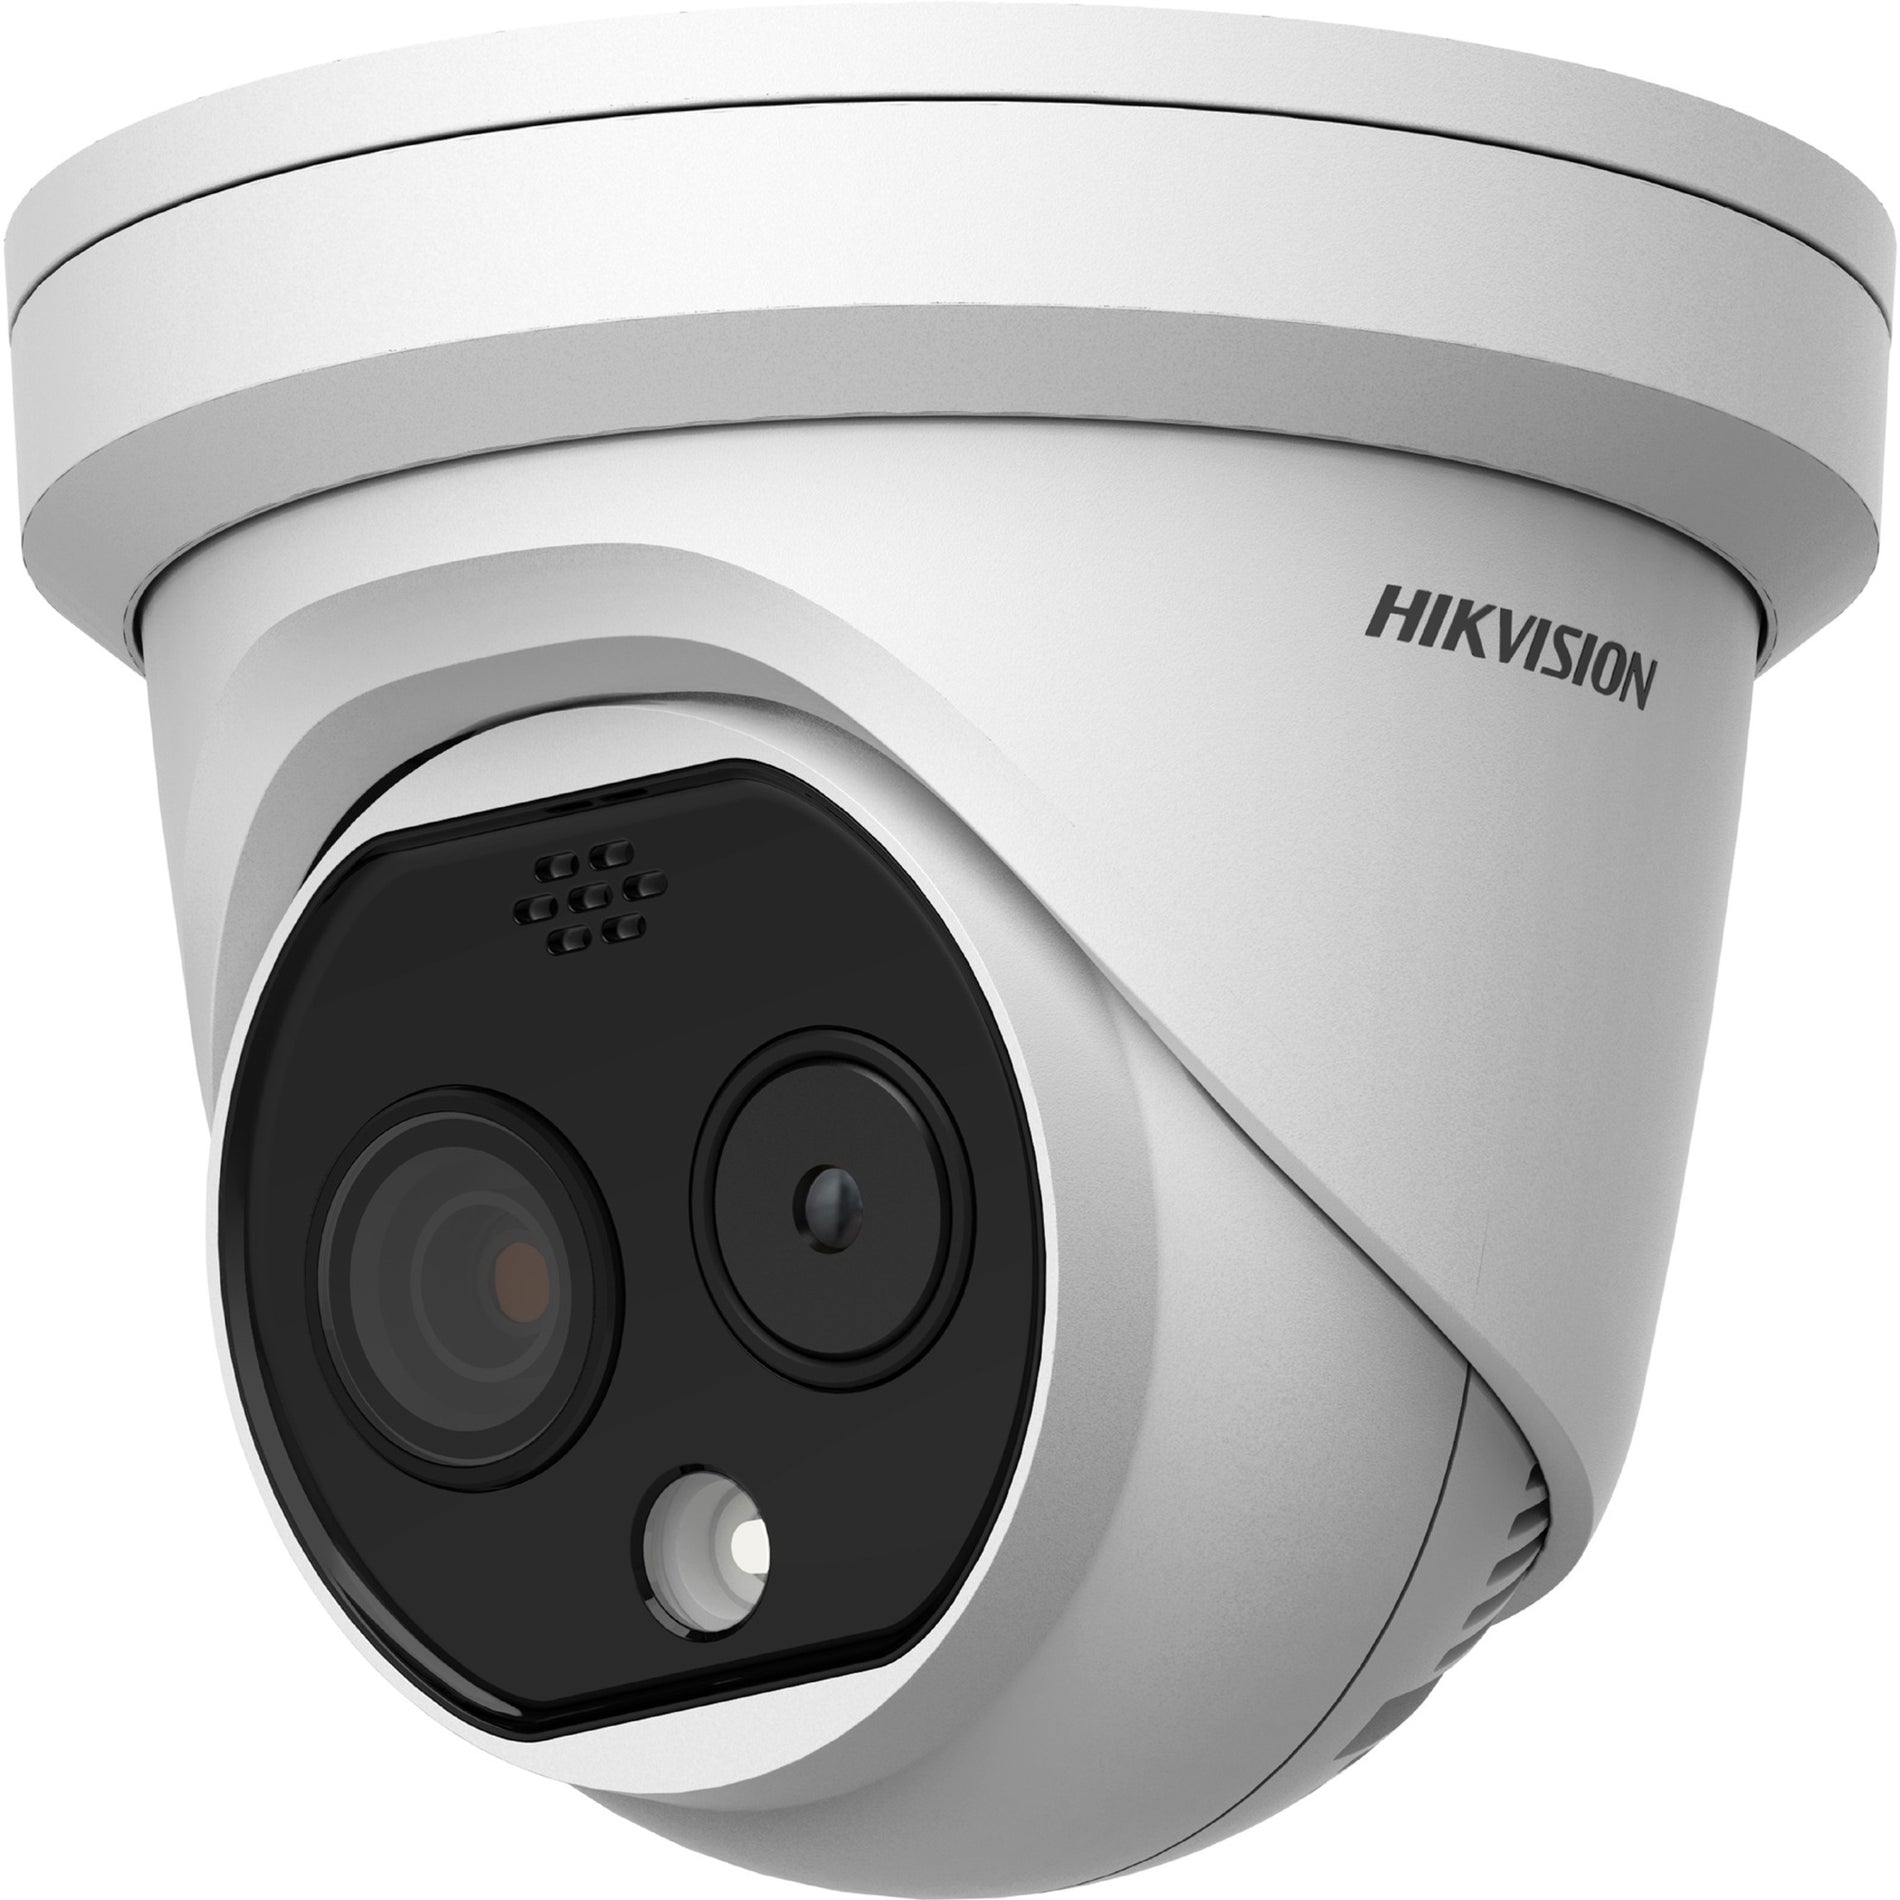 Hikvision DS-2TD1228-2/QA Thermal & Optical Bi-Spectrum Network Turret Camera, Wide Dynamic Range, Surge Protection, IR LED